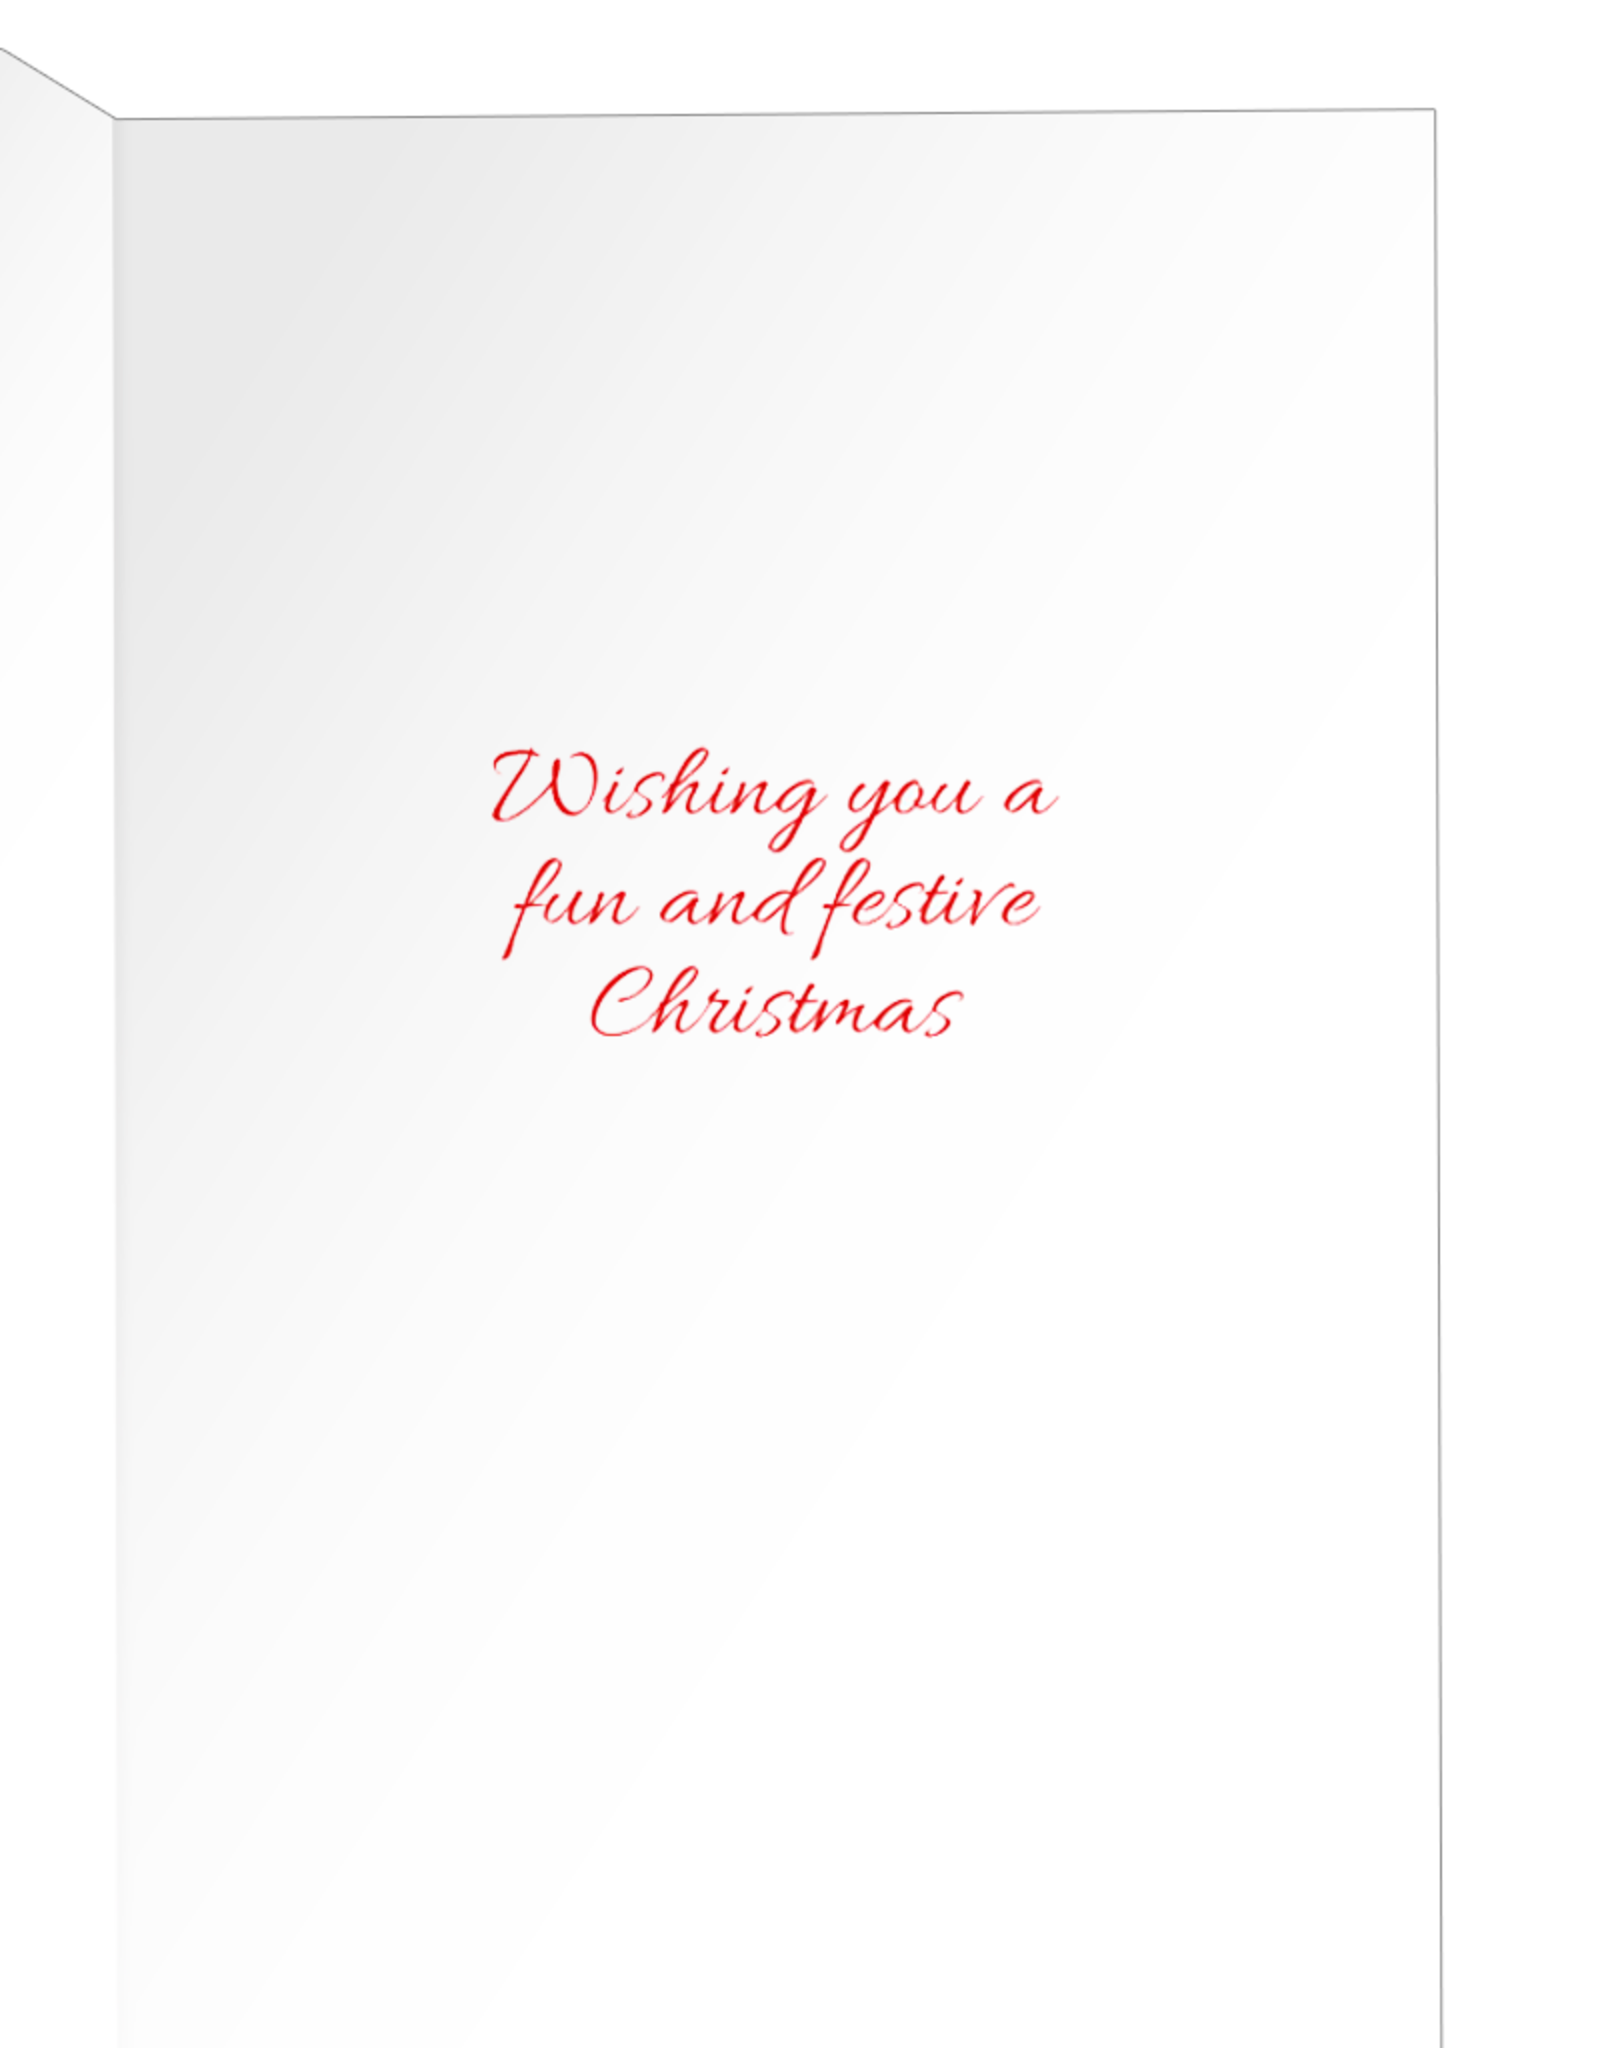 Caspari Boxed Christmas Cards 16pk Santa In Golf Cart Foil